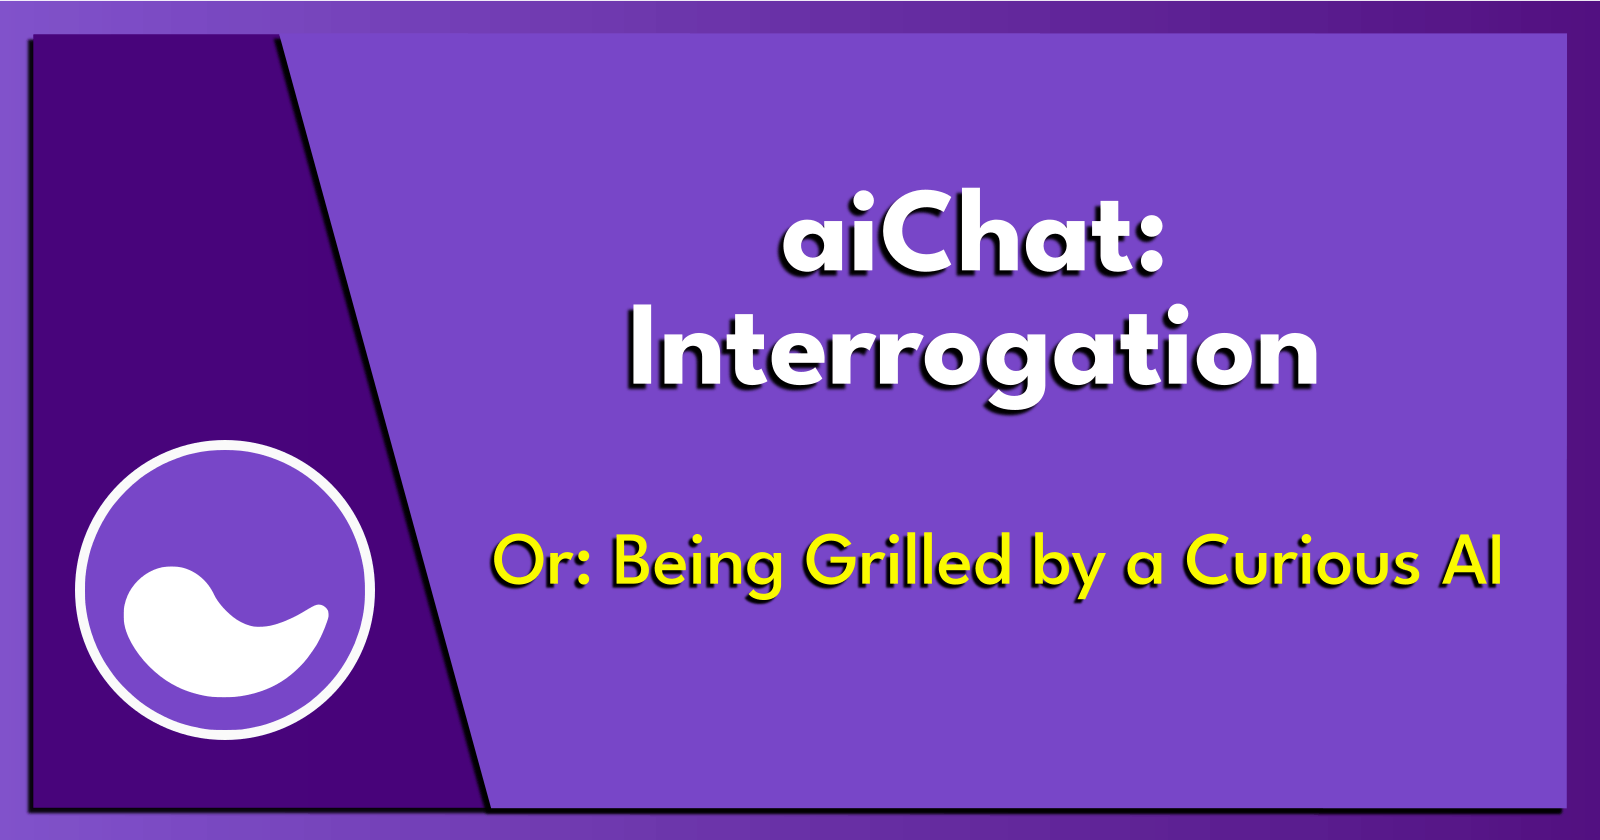 aiChat: Interrogation.